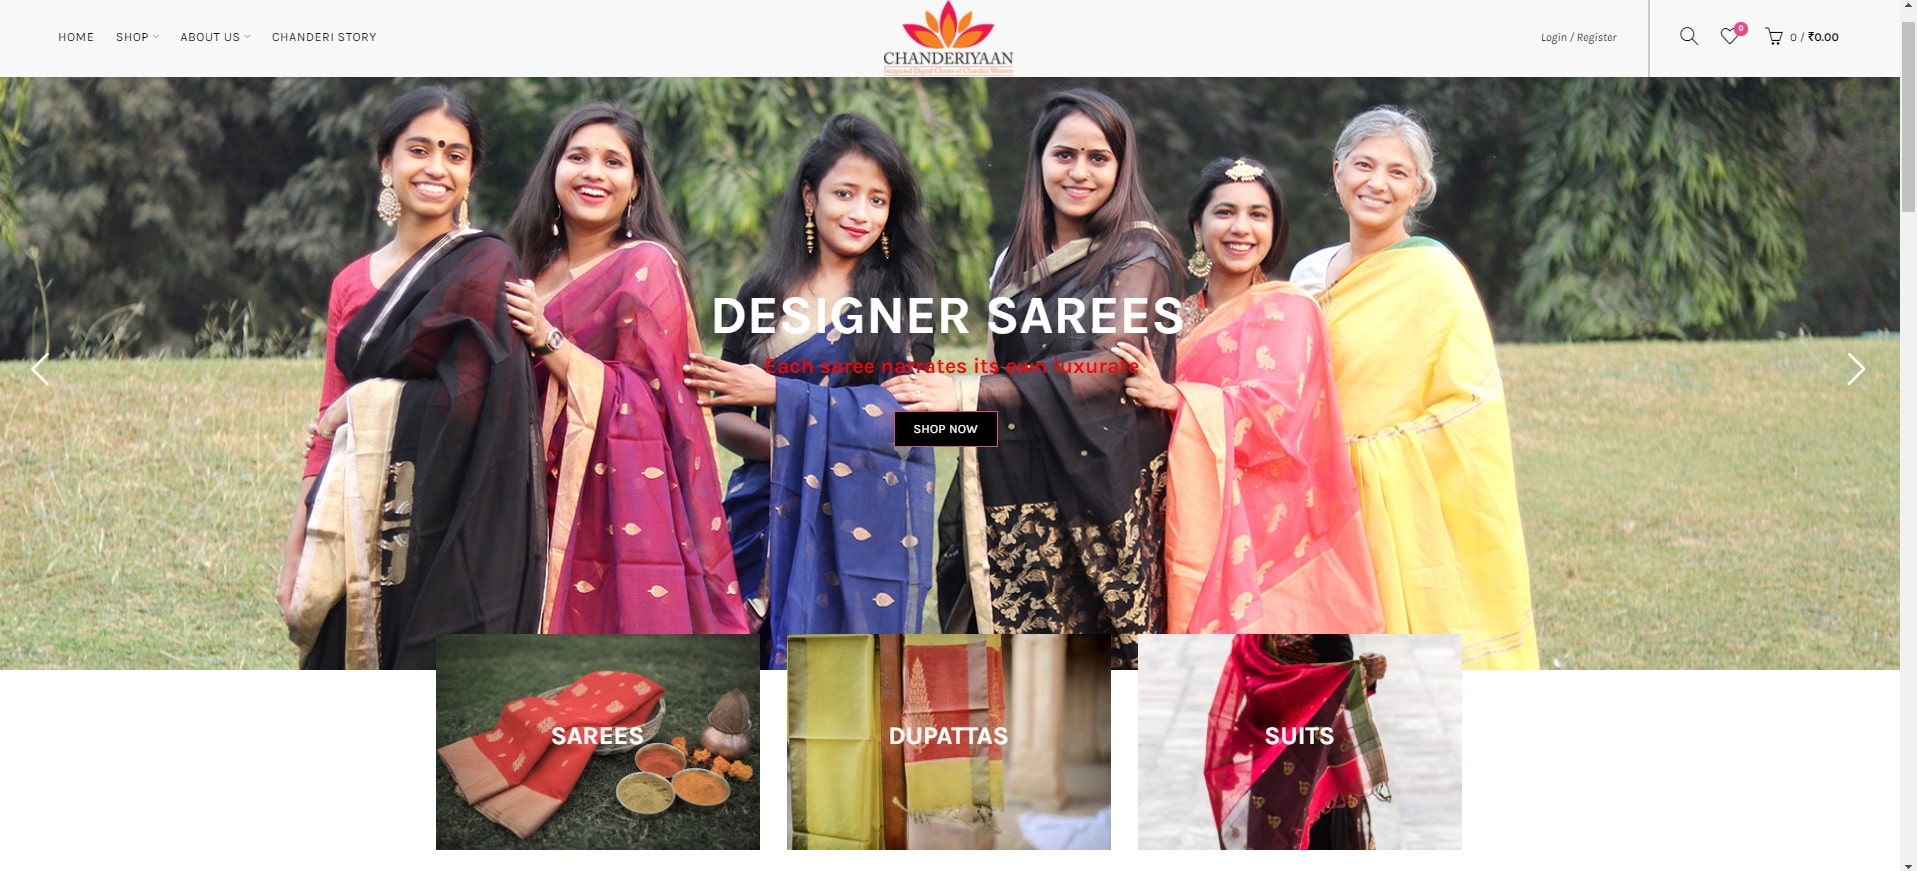 Six femmes en saris